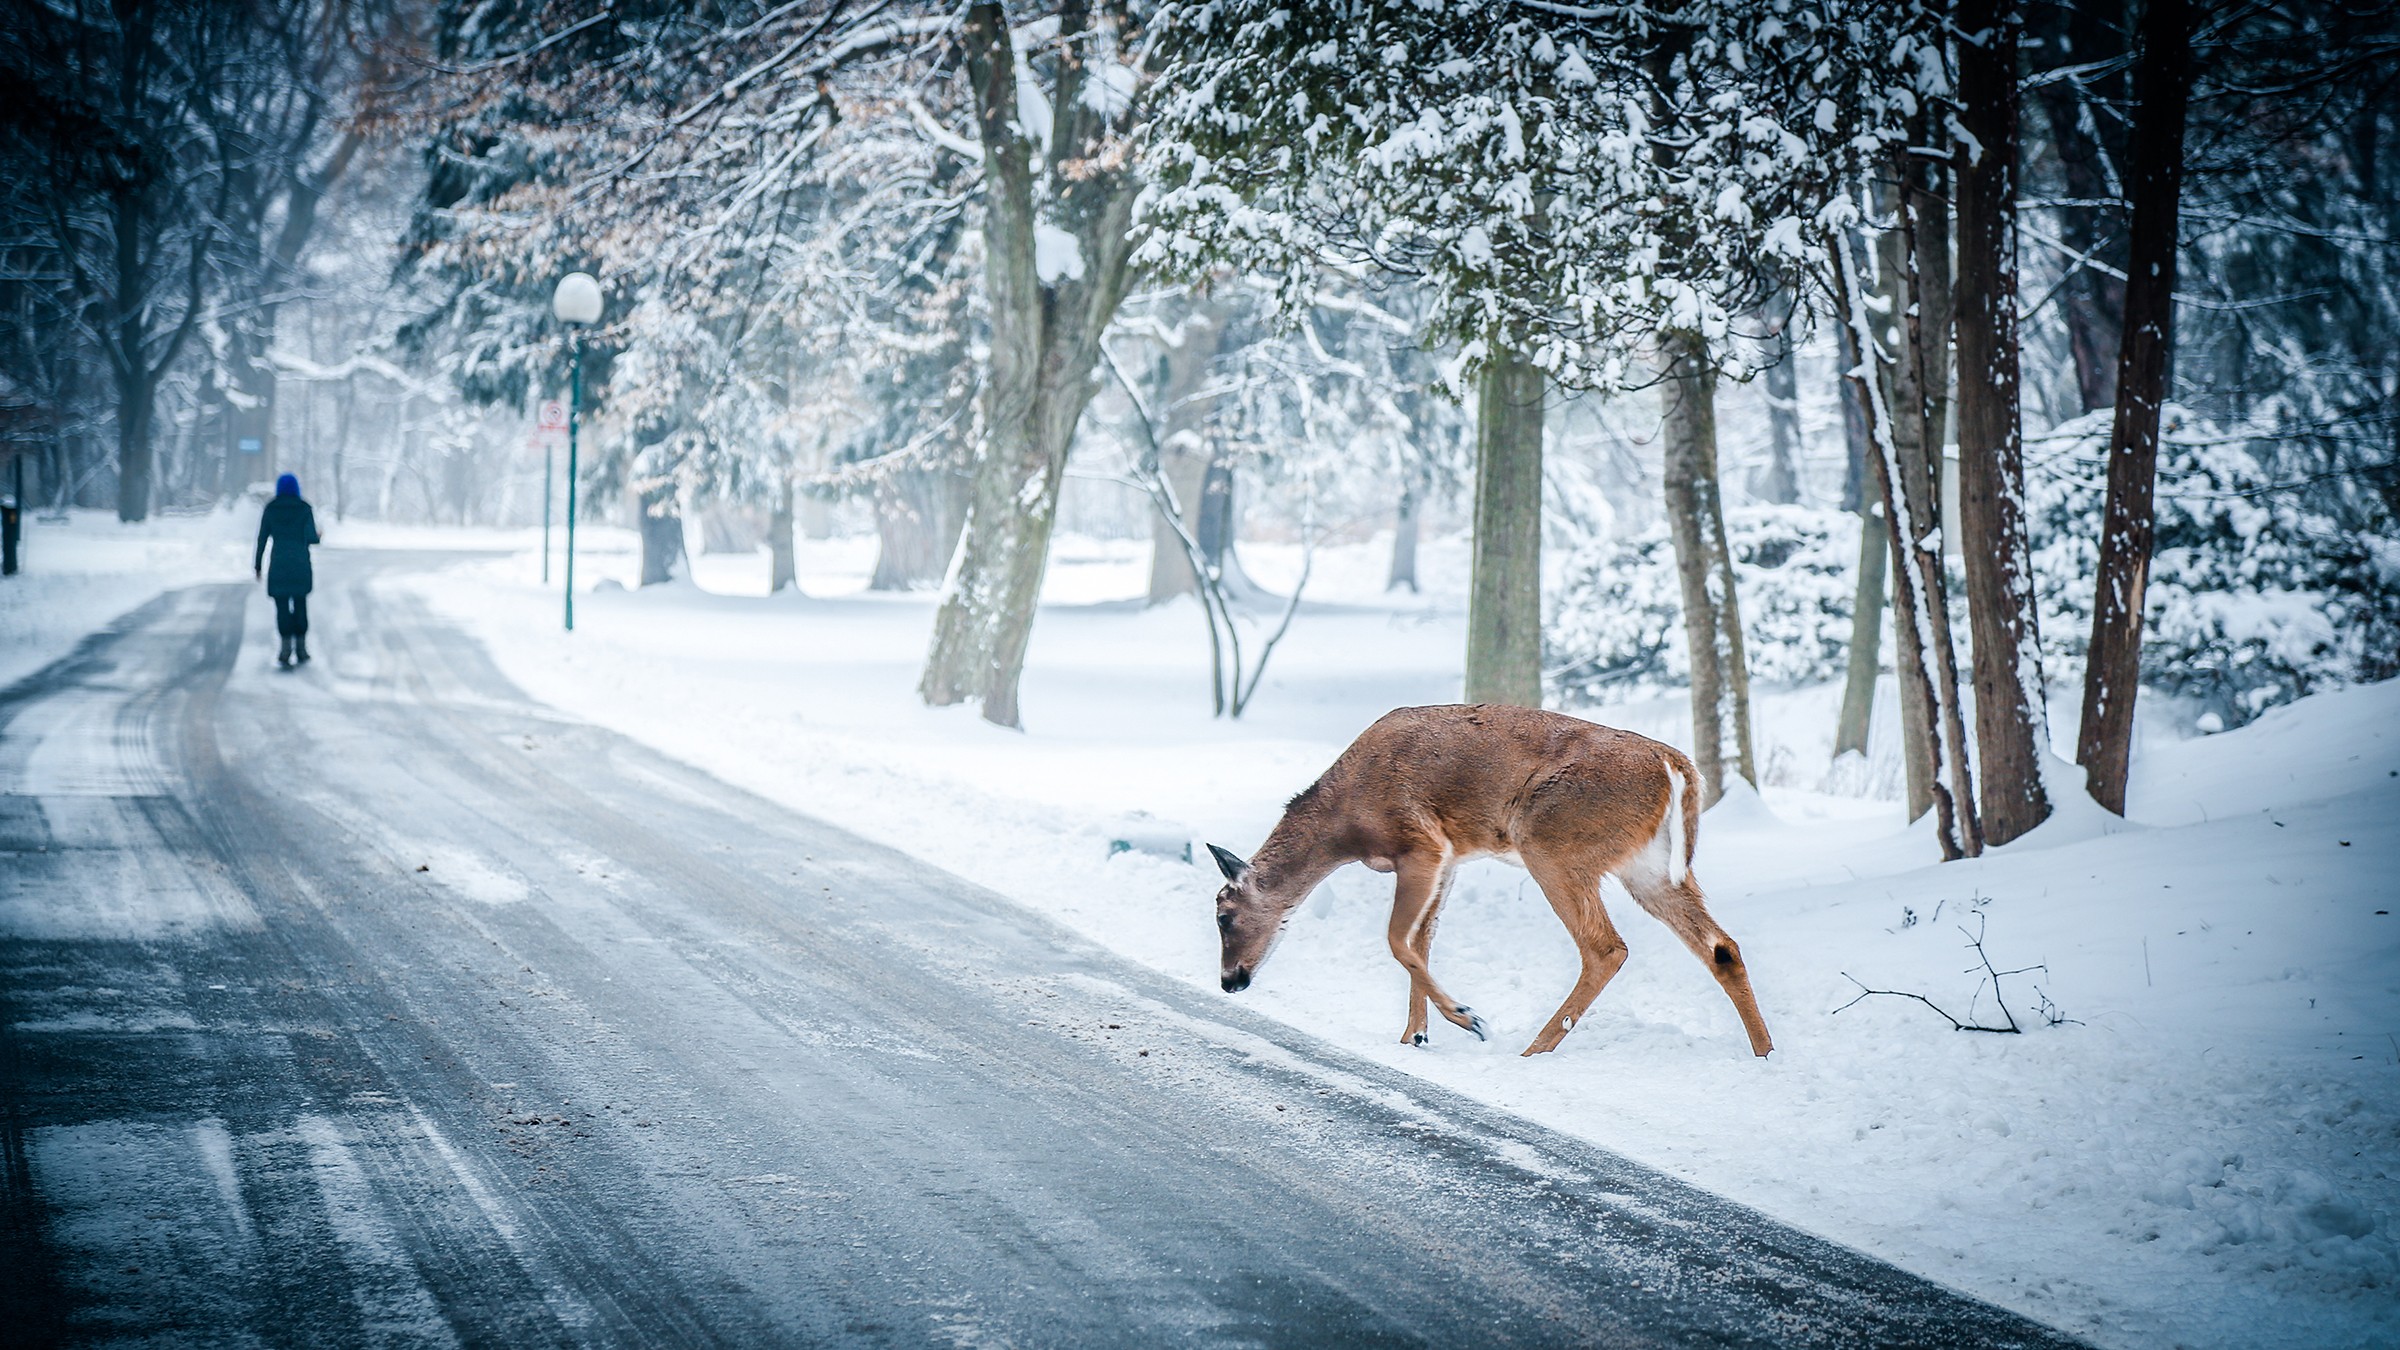 General 2400x1350 deer winter snow path trees animals wildlife mammals